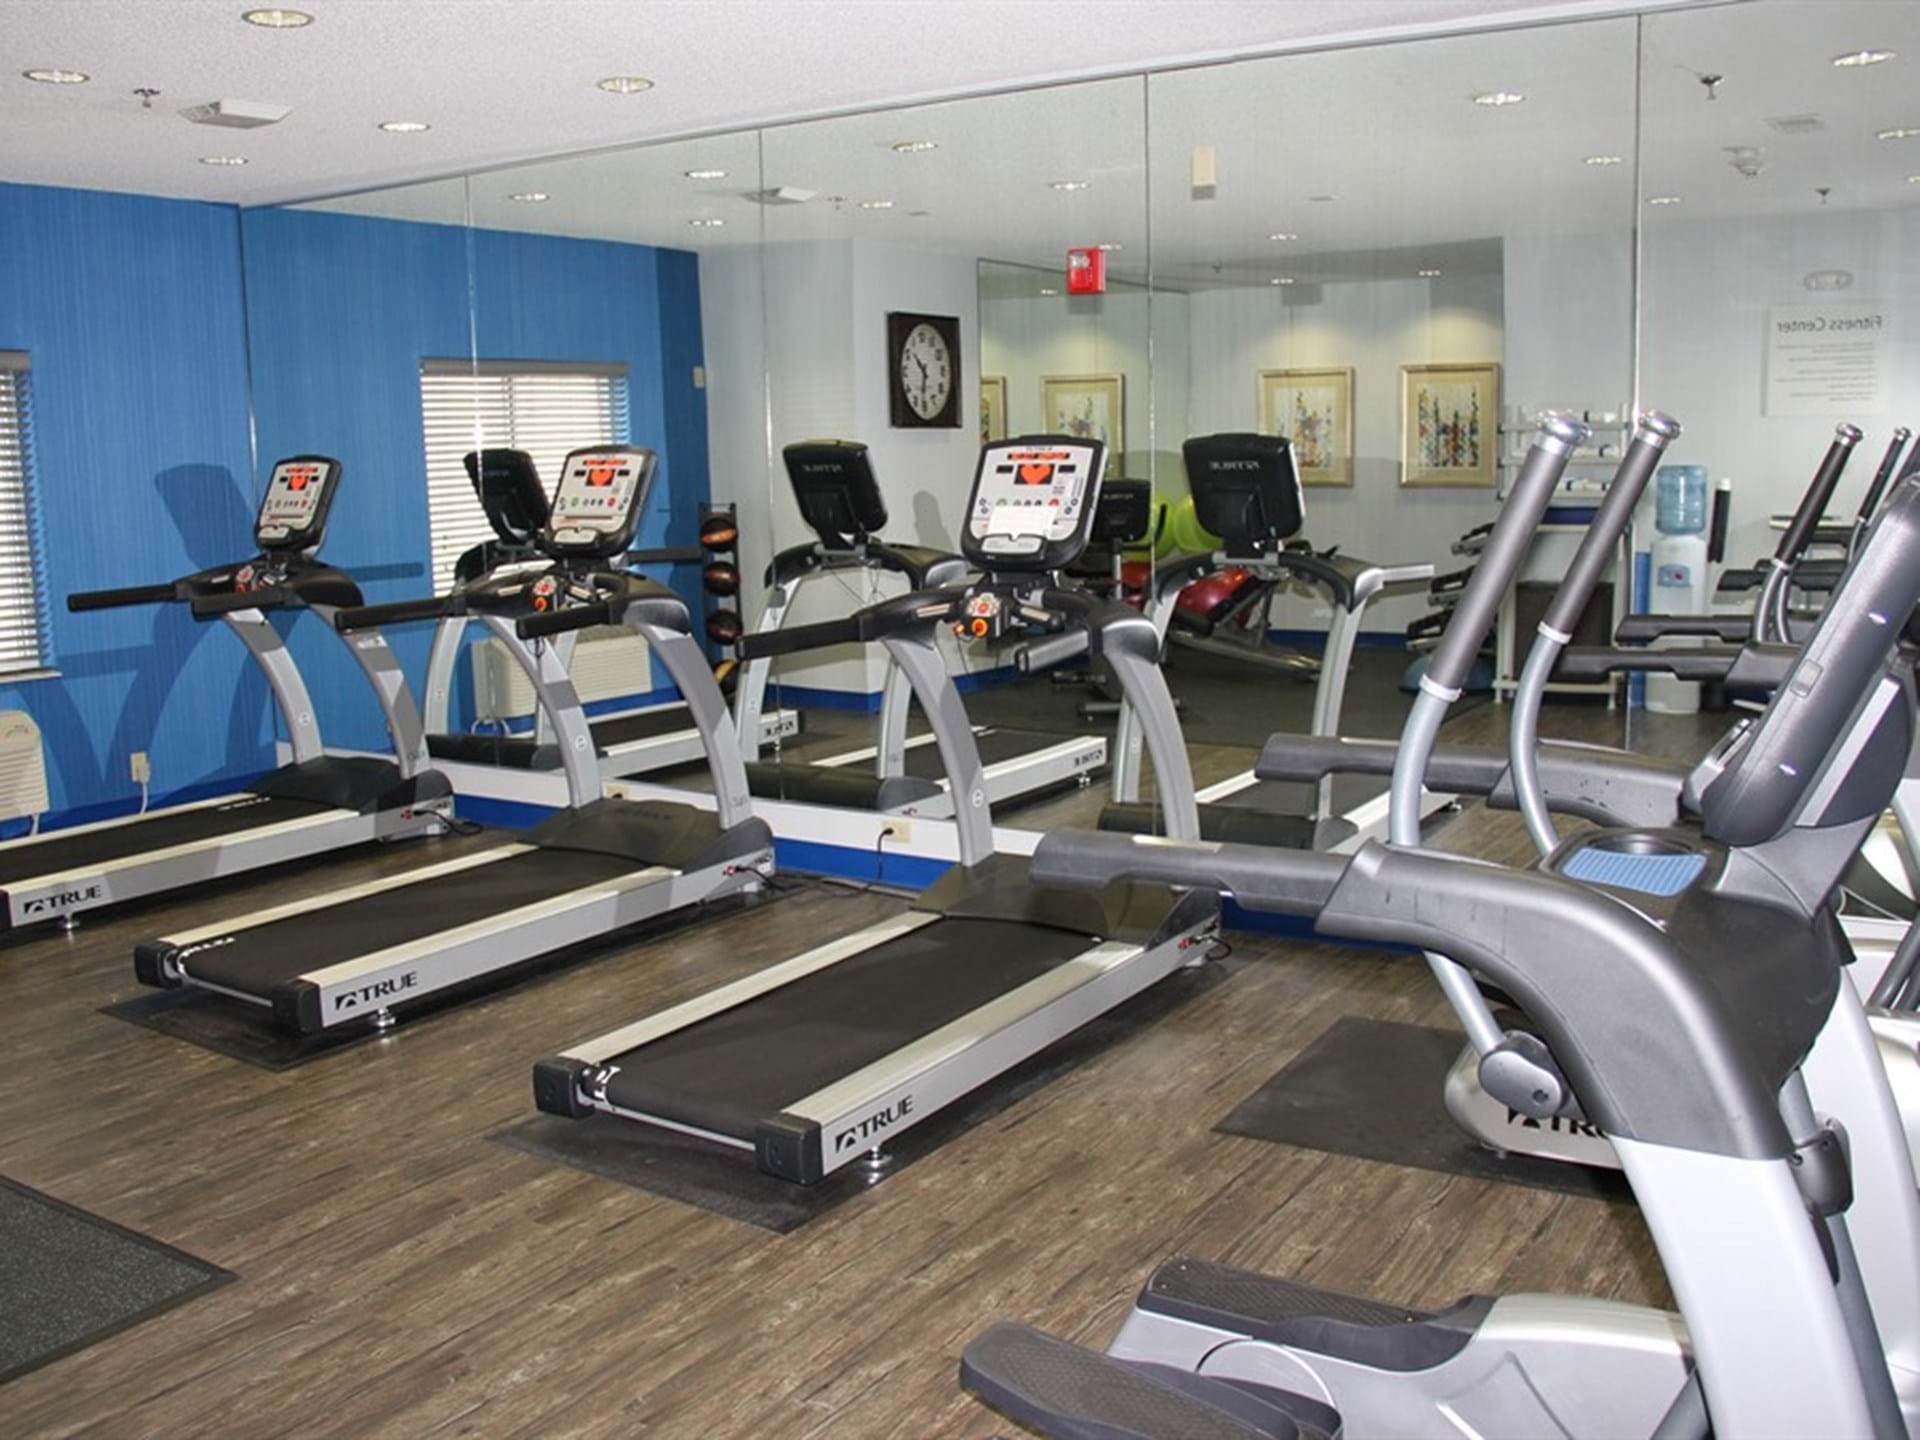 Holiday Inn Express - Fitness Center